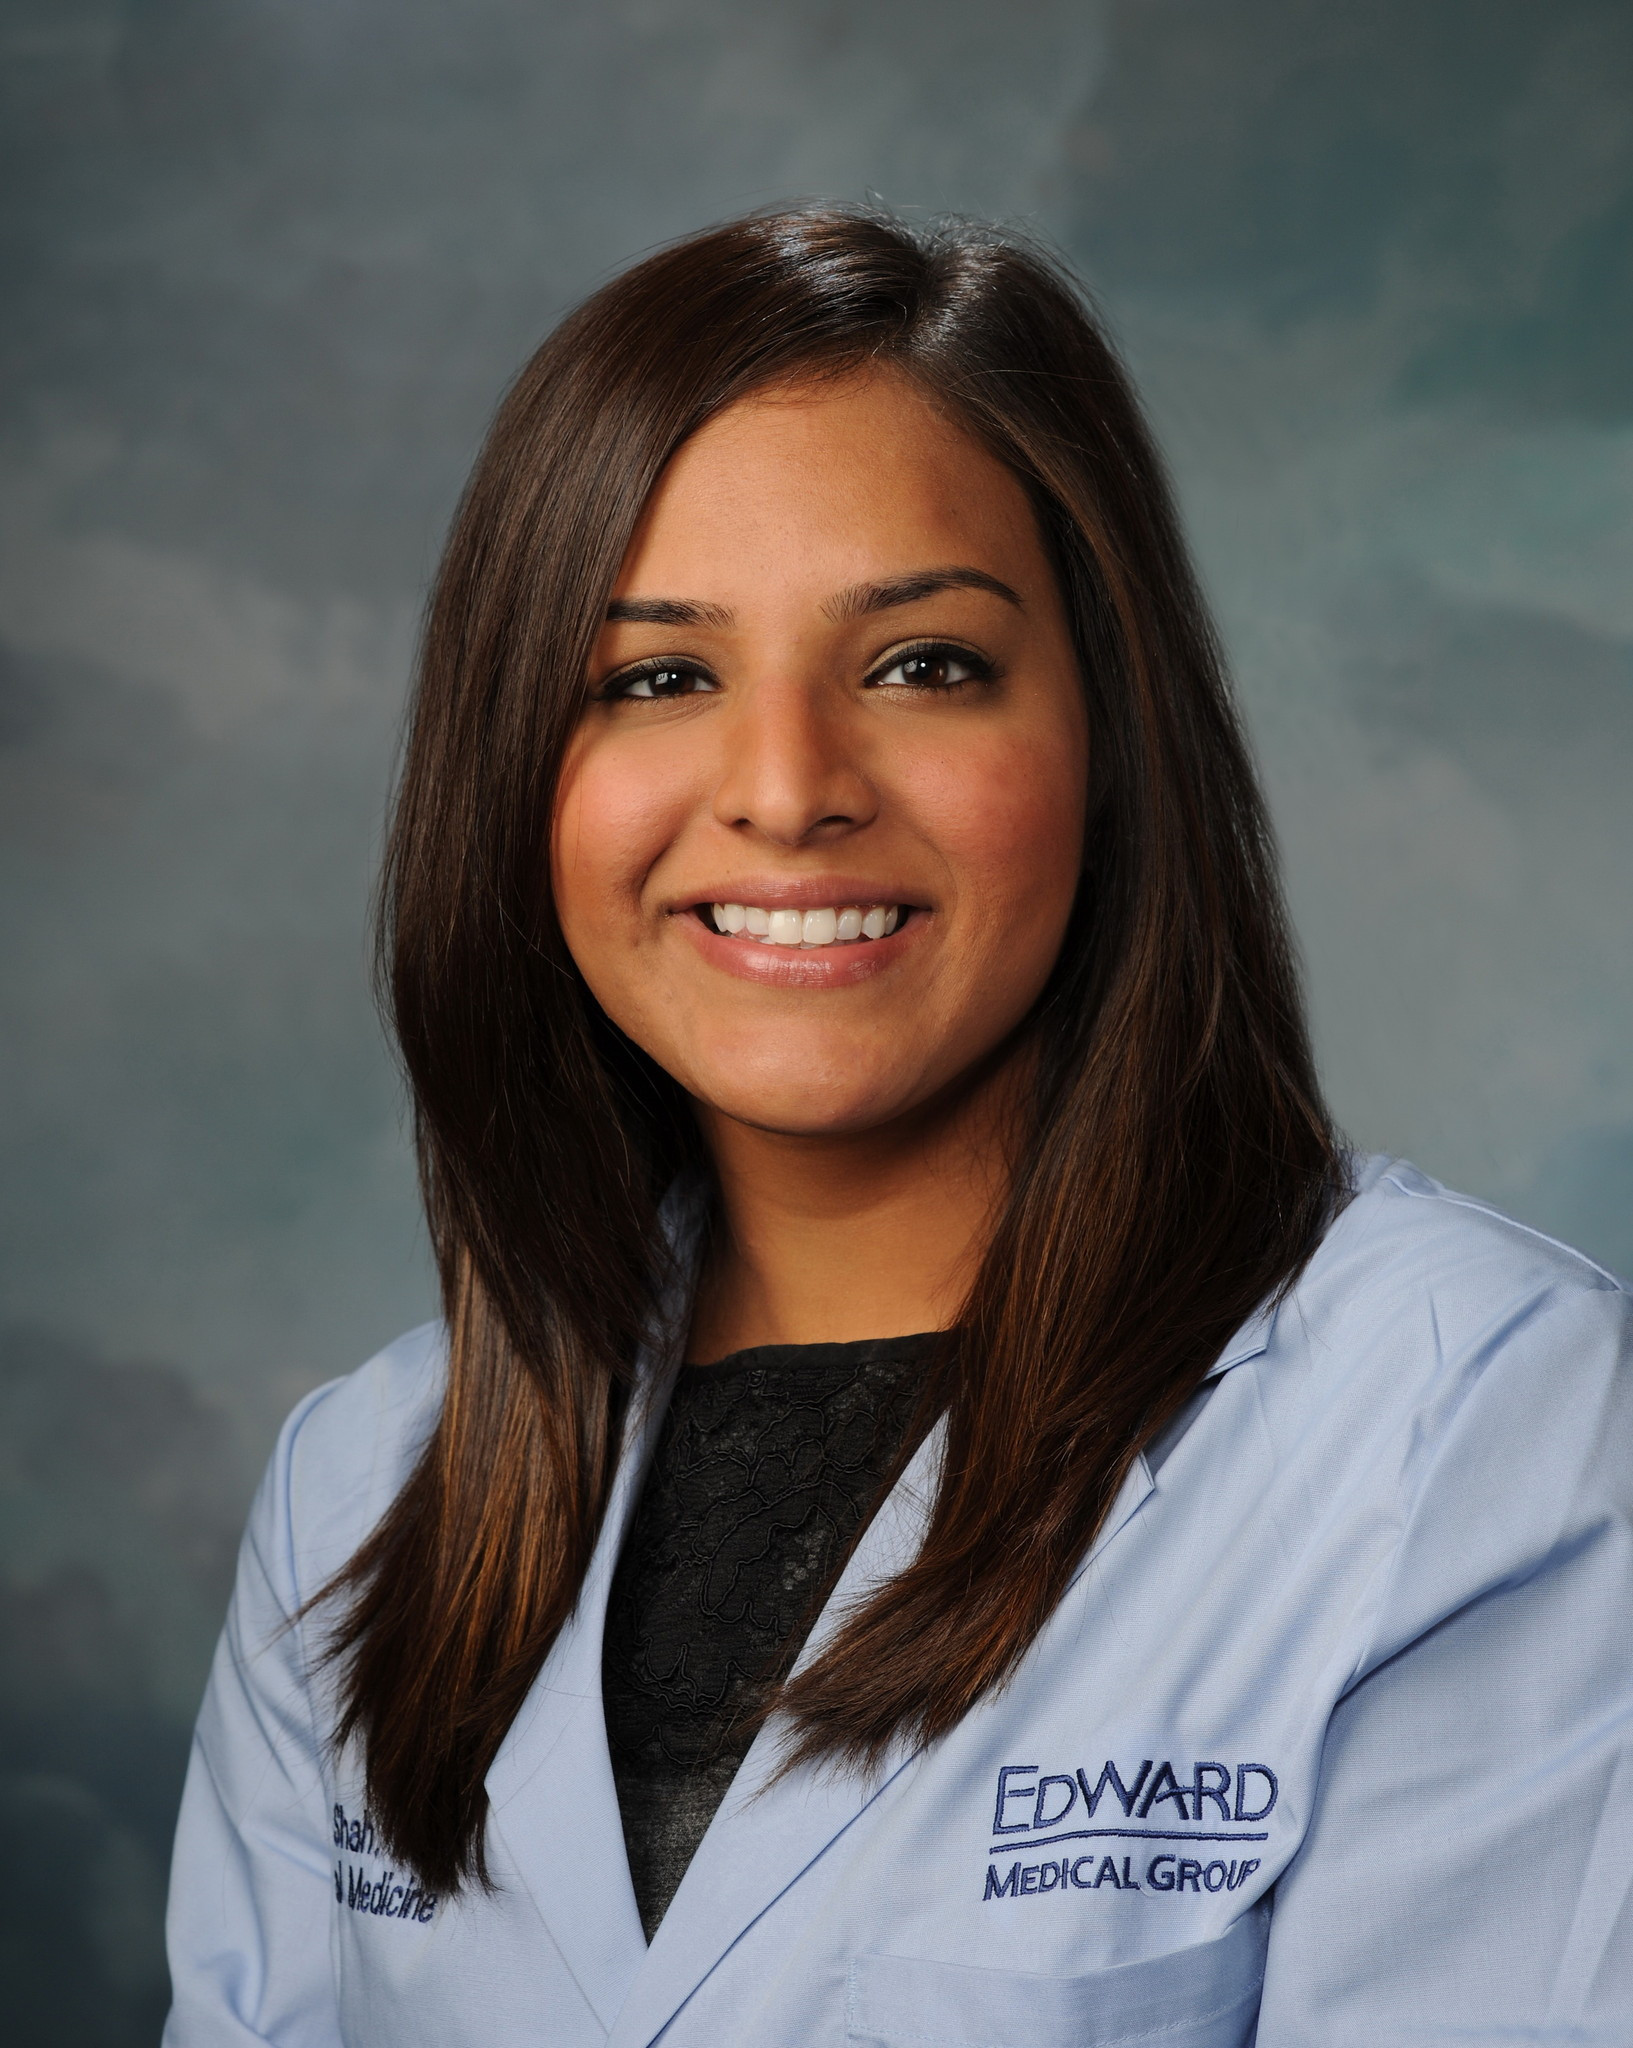 Dr Neha Shah Joins Edward Medical Group In Plainfield Chicago Tribune 